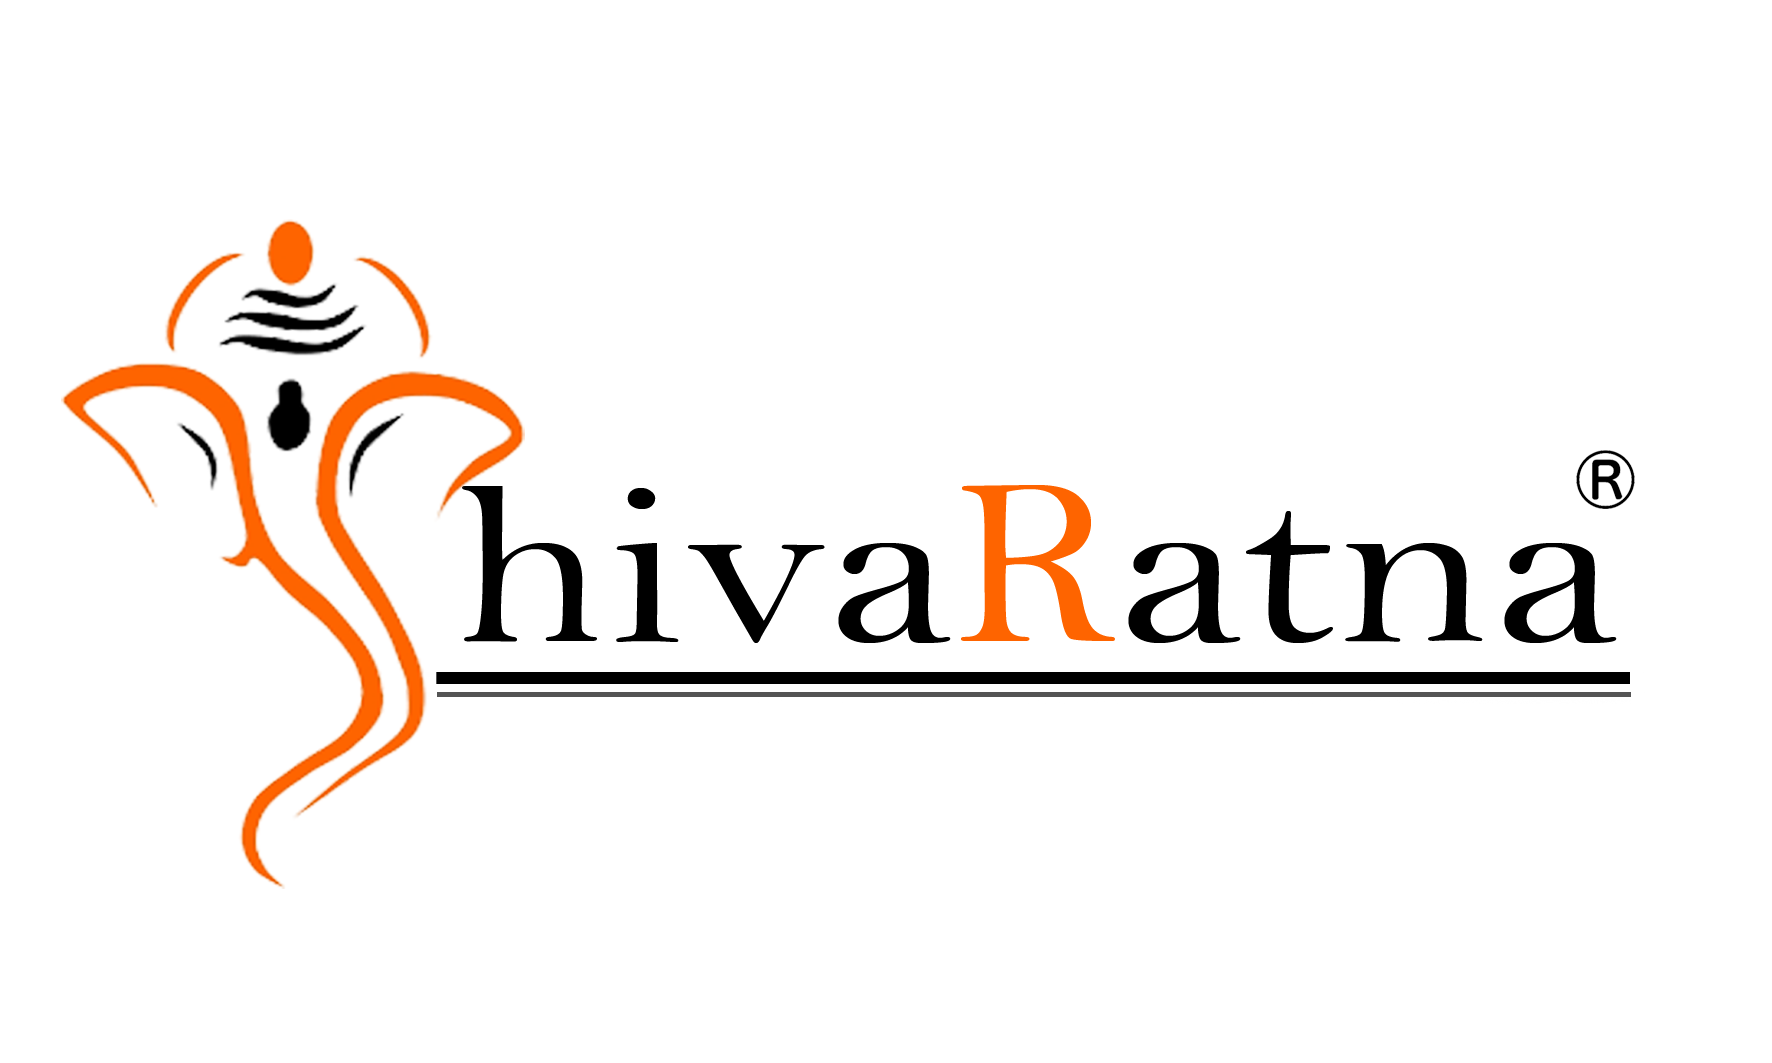 Griha pravesh invitation card 290123 - Free Hindi Design